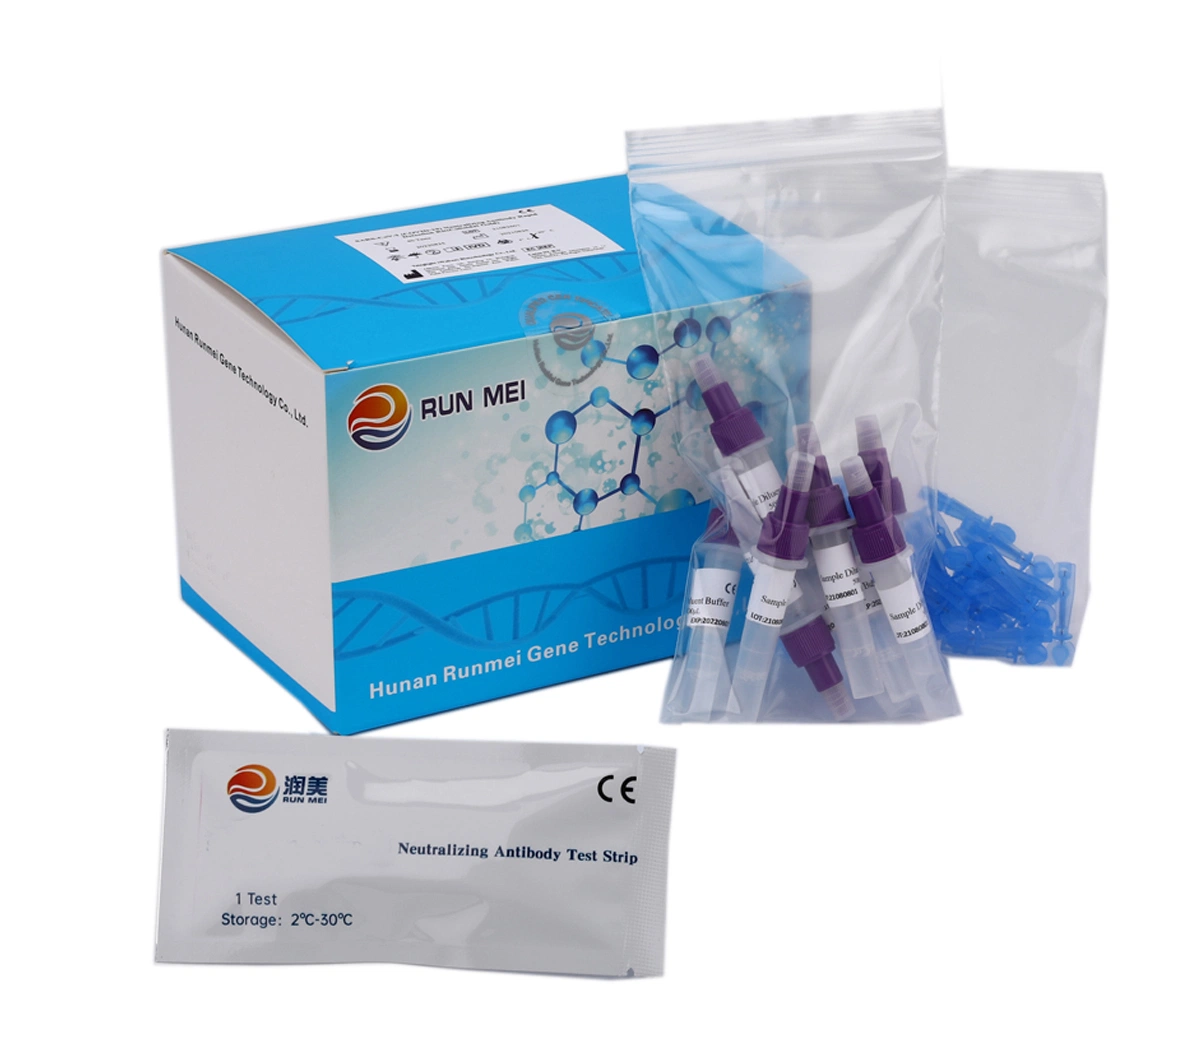 Neutralizing Antibody Test Kit Rapid Test for Vaccine Effectiveness Test Strip